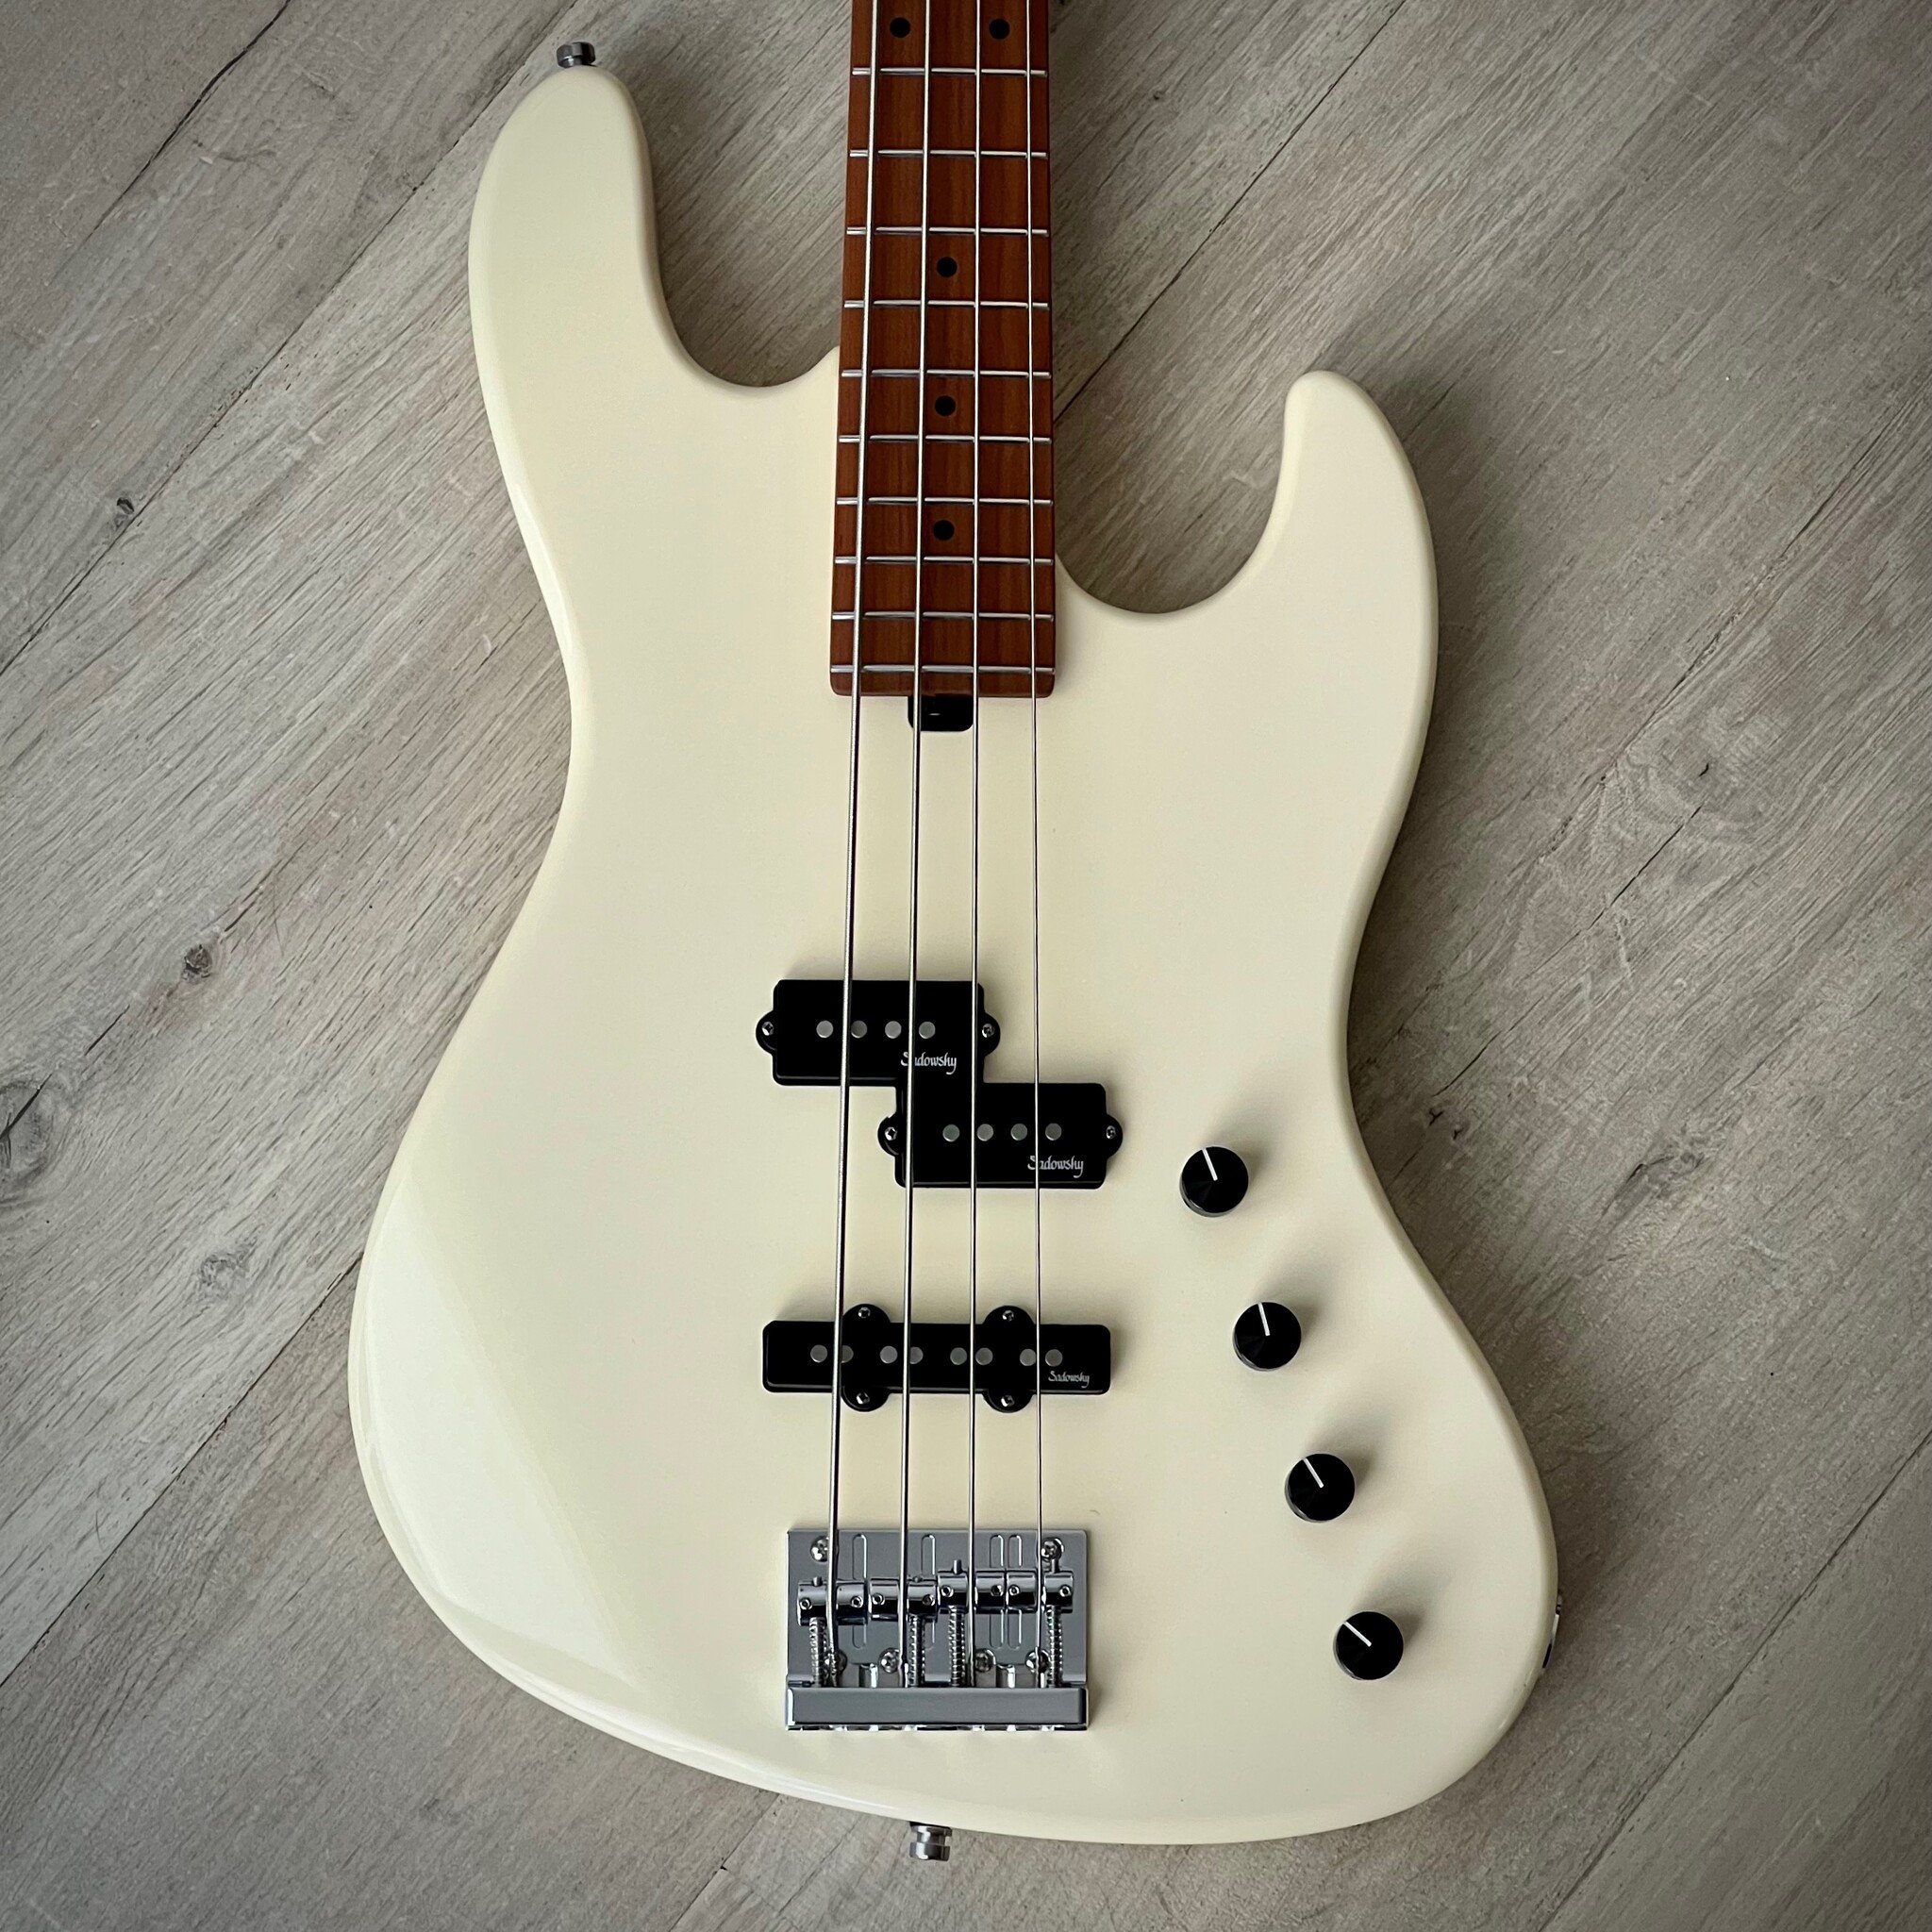 Sadowsky MetroExpress 21-Fret Verdine White Signature 4-String Bass, White High Polish, Roasted Maple Board Special Edition (2023 Update)